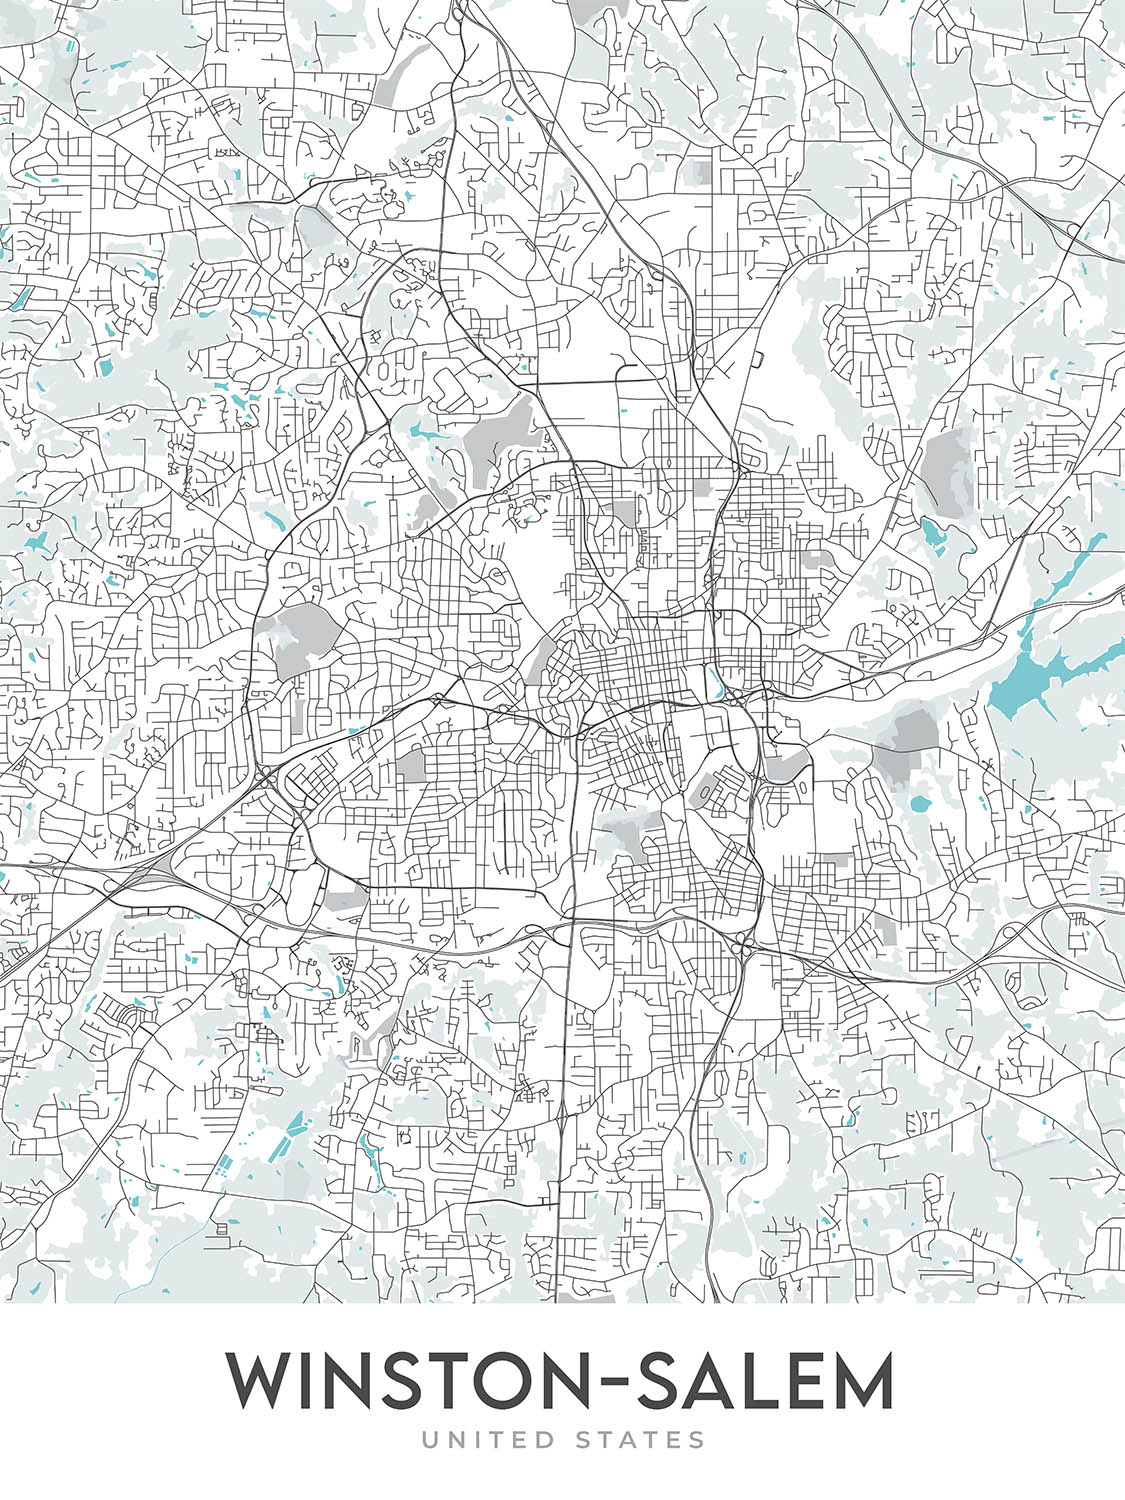 Modern City Map of Winston-Salem, NC: Ardmore, Reynolda, Hanes Mall, Wake Forest University, I-40